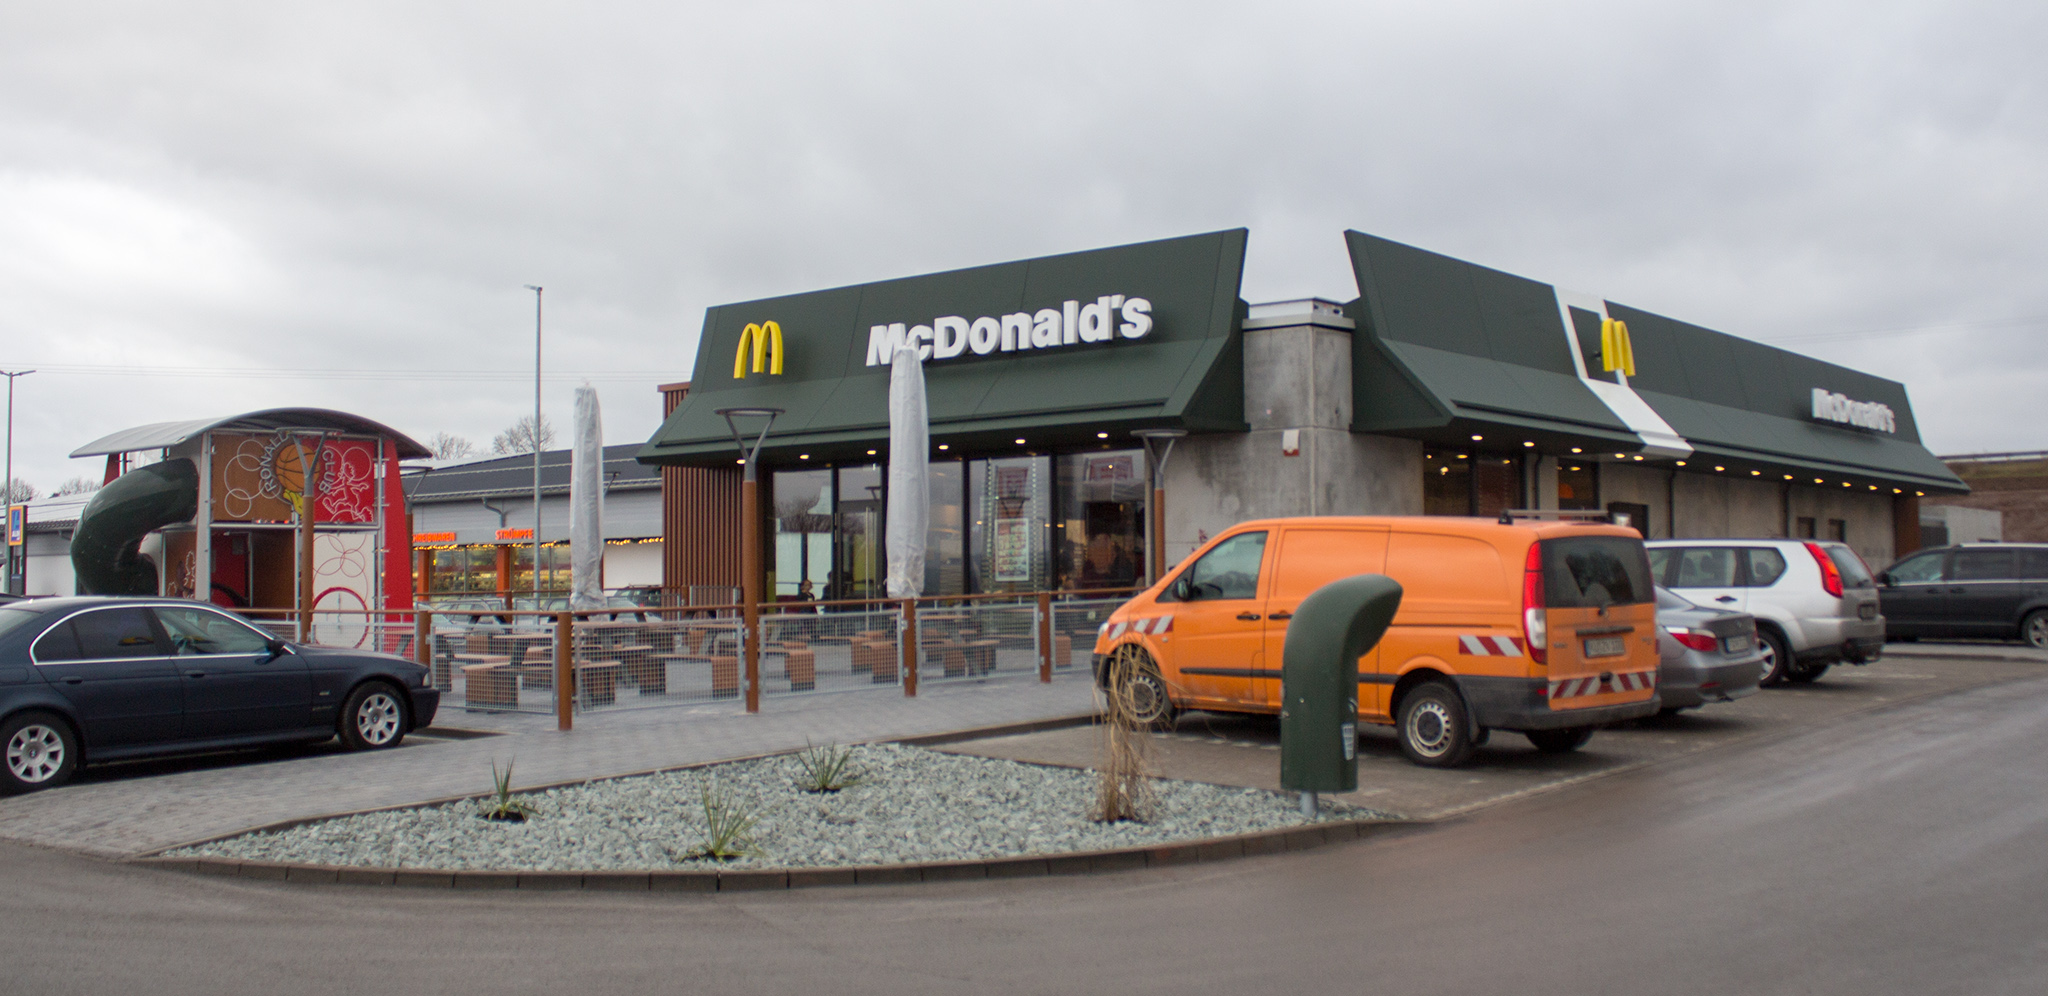 Das McDonald’s-Restaurant in Neudrossenfeld